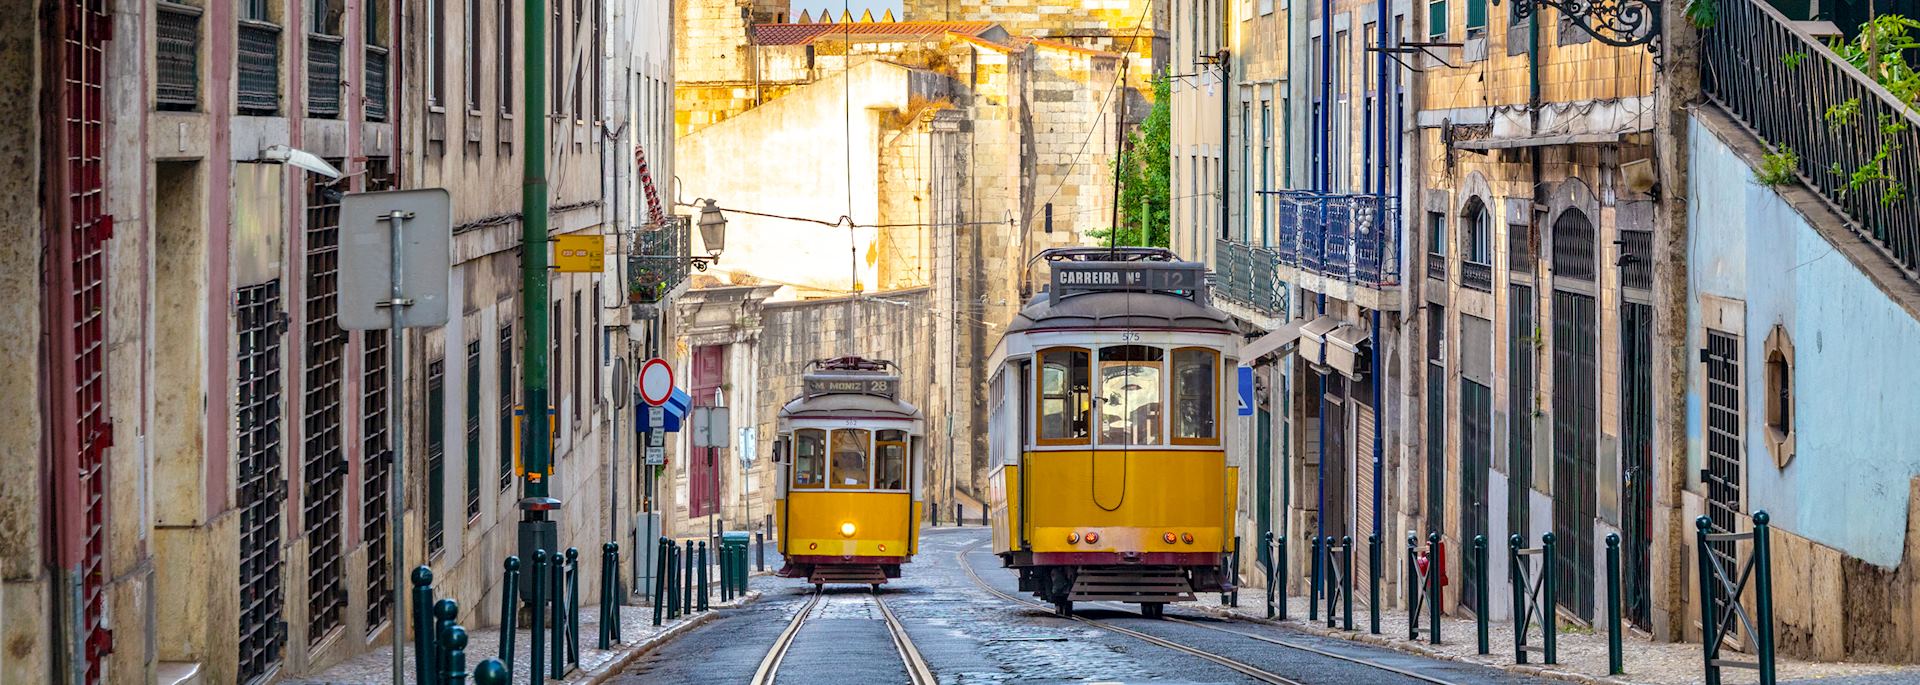 Historic trams in Lisbon